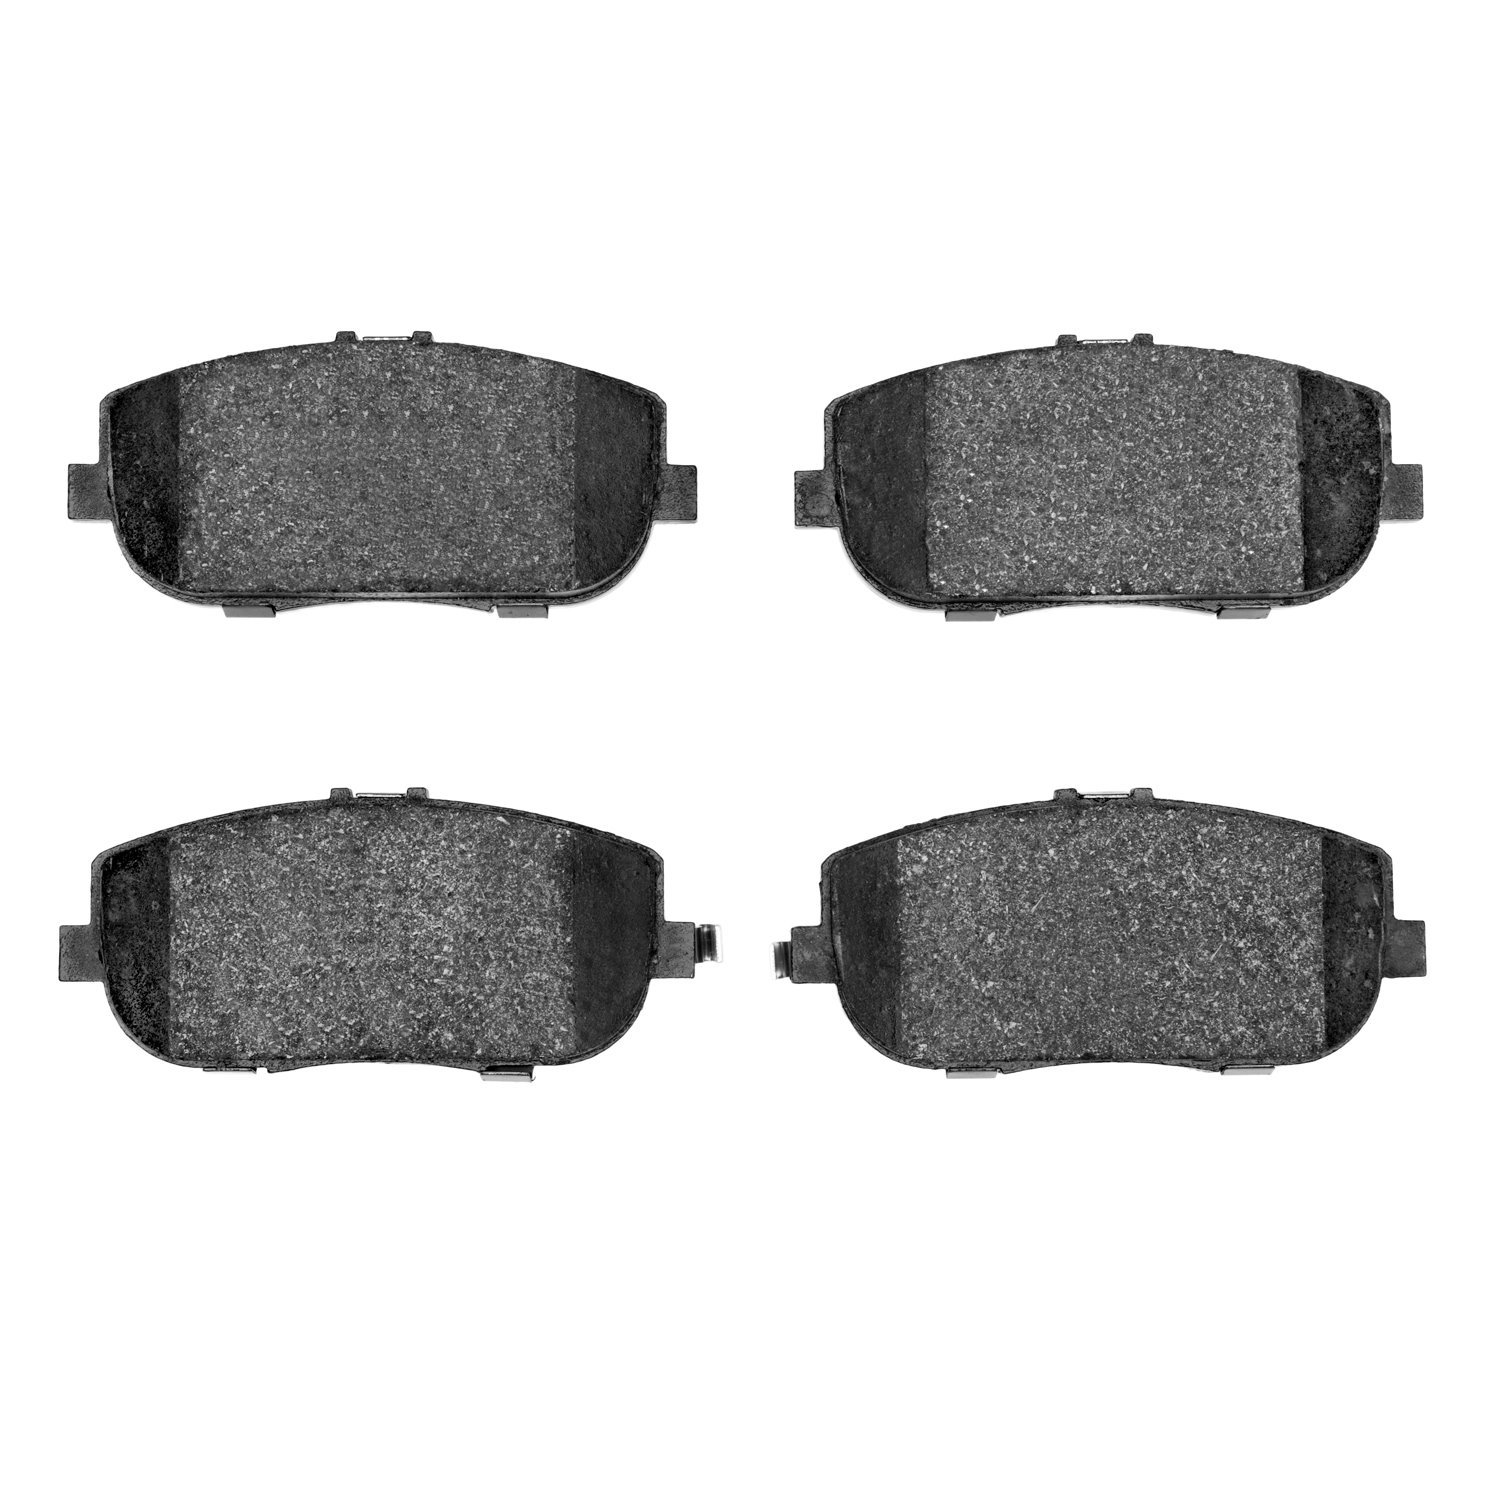 1000-1180-00 Track/Street Low-Metallic Brake Pads Kit, Fits Select Multiple Makes/Models, Position: Rear